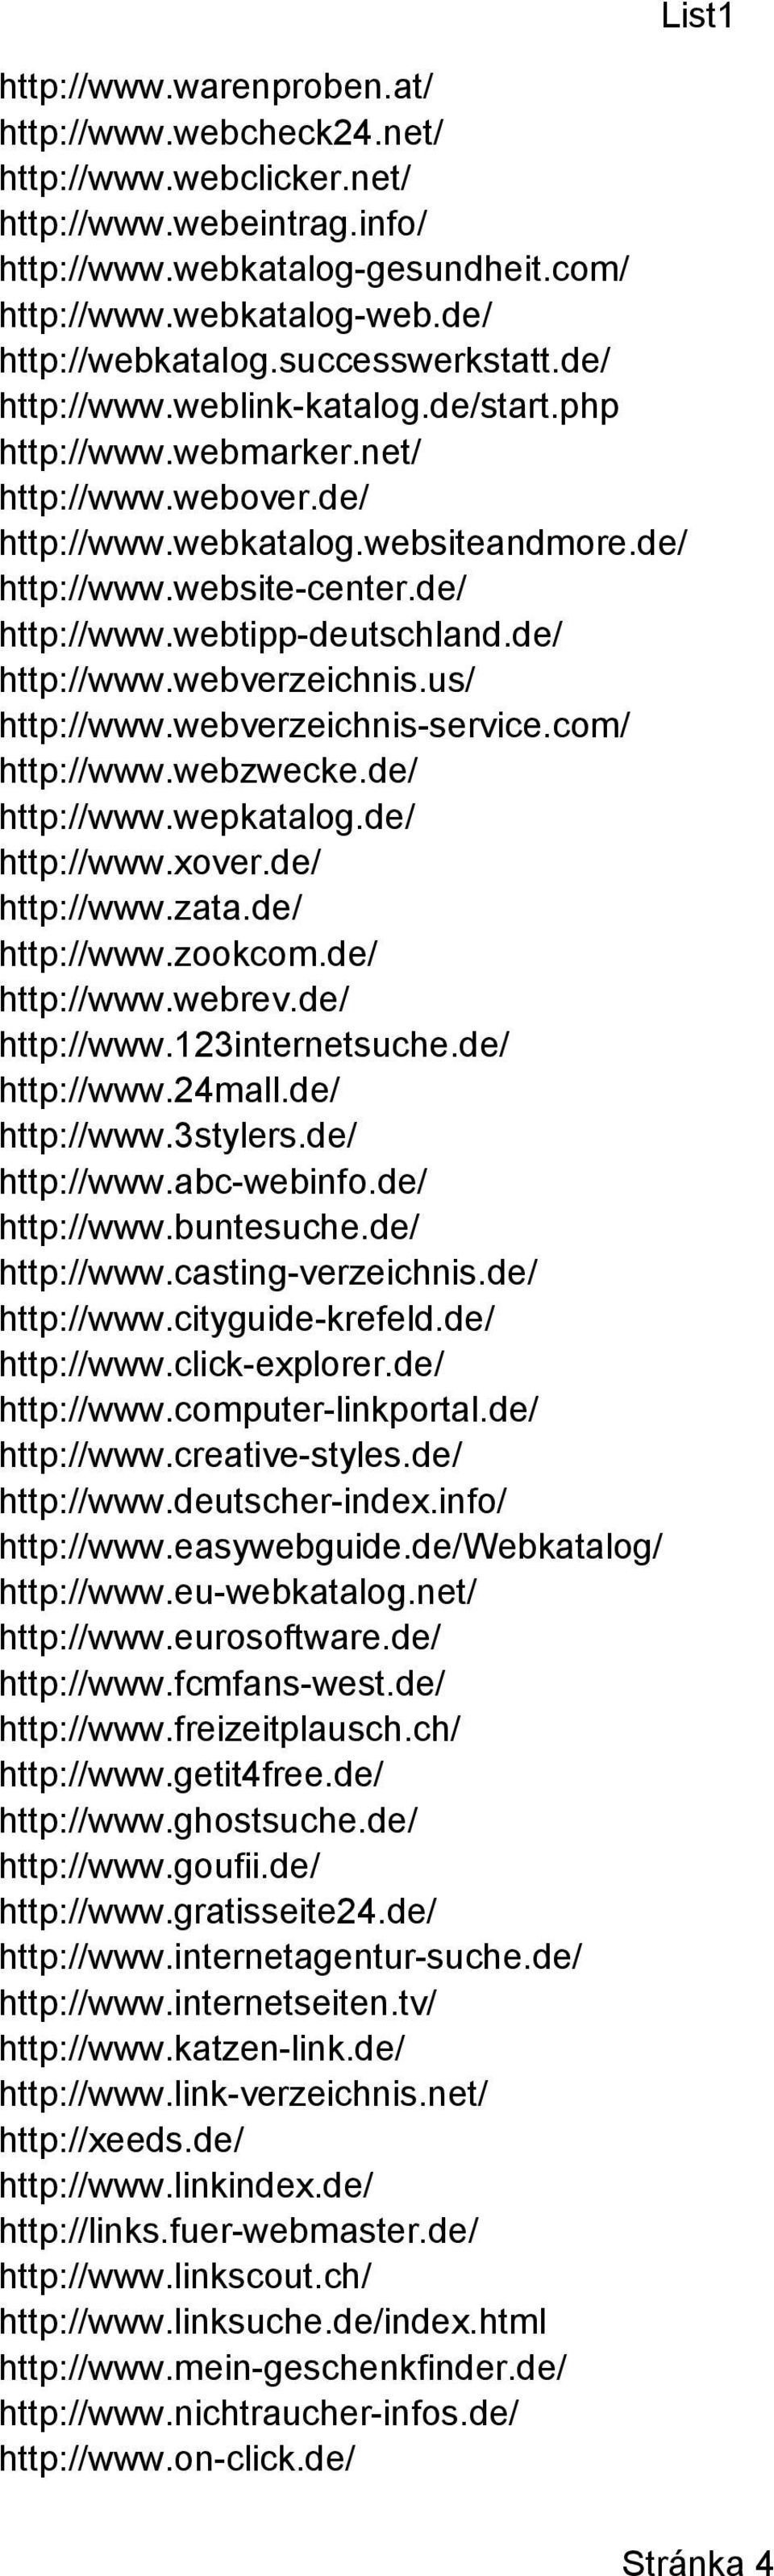 de/ http://www.webtipp-deutschland.de/ http://www.webverzeichnis.us/ http://www.webverzeichnis-service.com/ http://www.webzwecke.de/ http://www.wepkatalog.de/ http://www.xover.de/ http://www.zata.